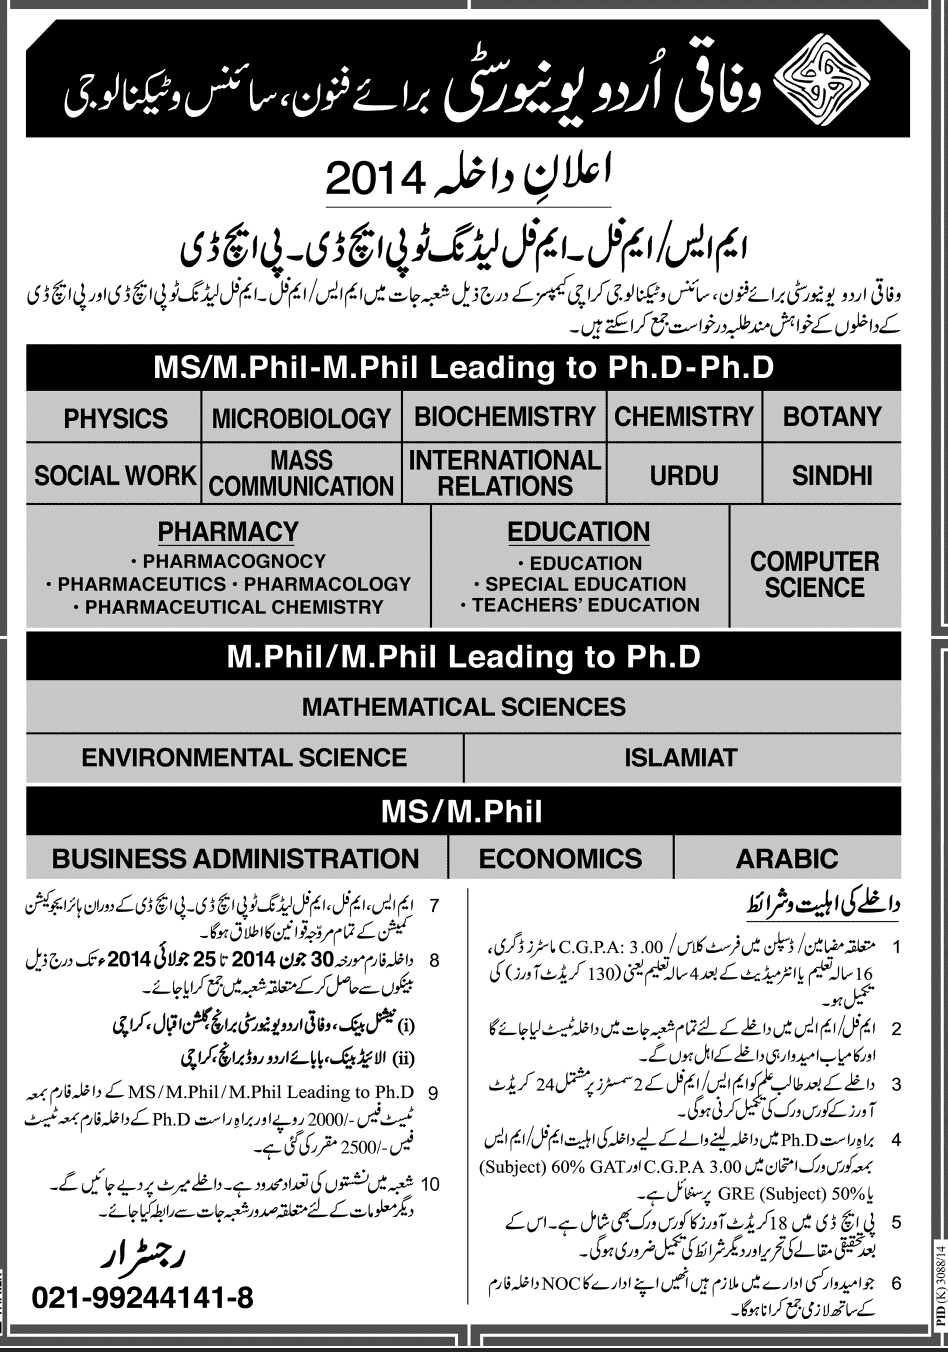 Federal Urdu University Karachi MS, M.Phil, PhD Admission 